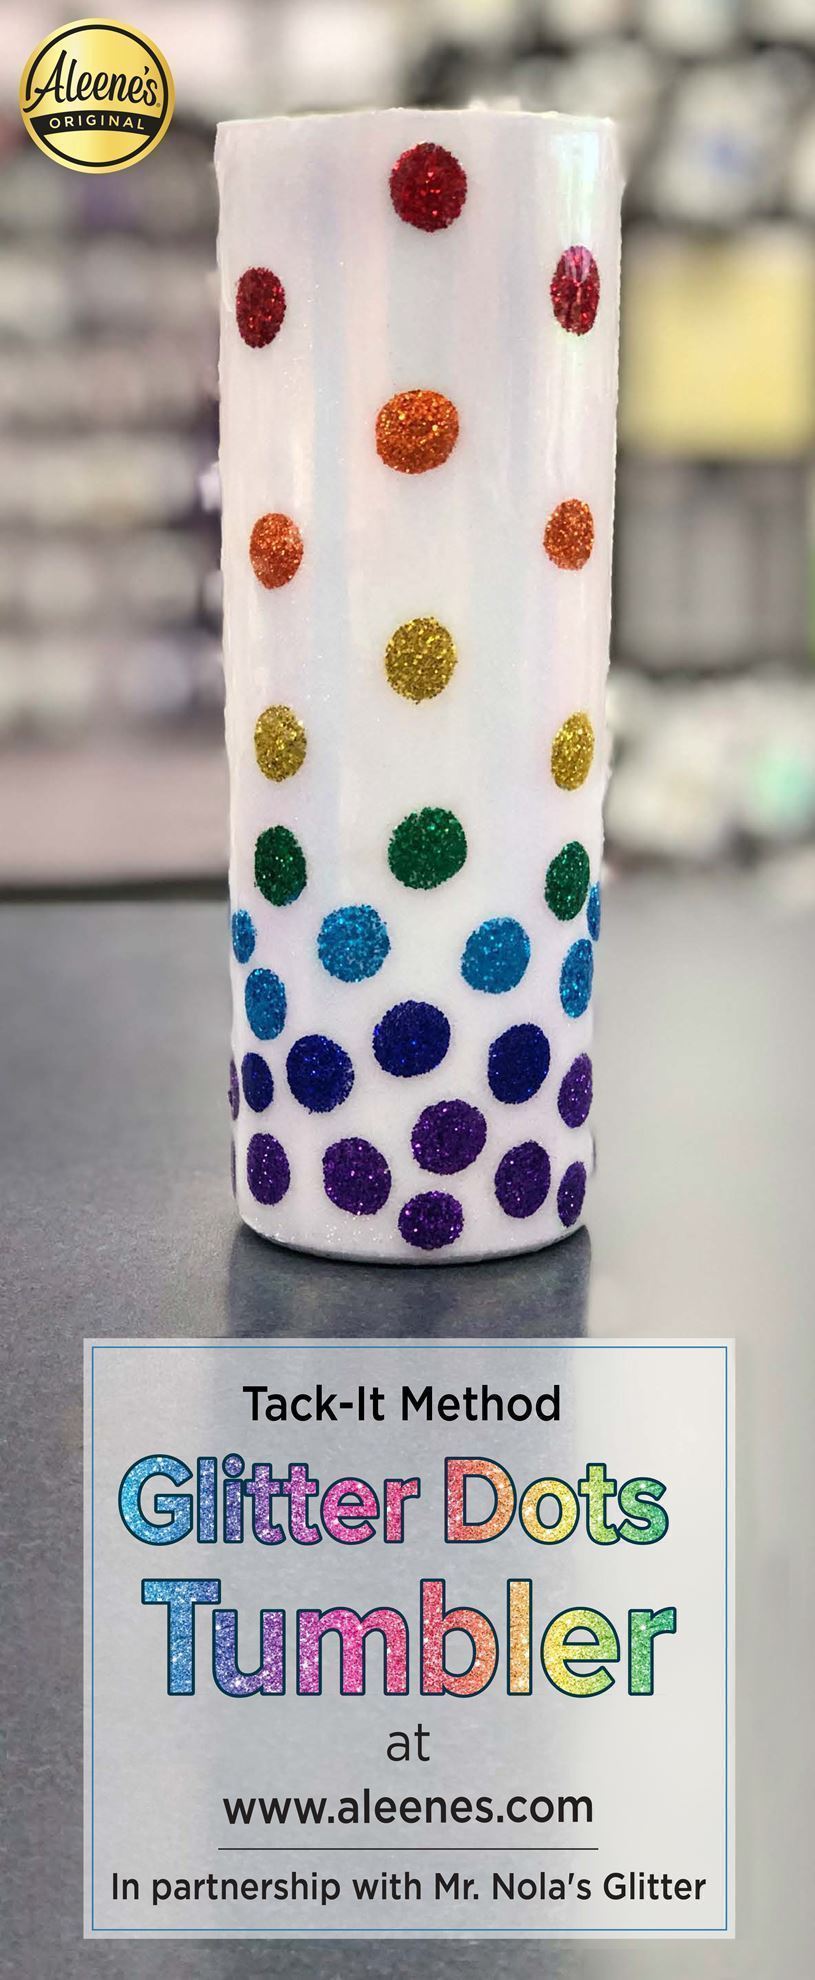 Aleene's Original Glues - Tack-It Method Rainbow Glitter Dots Tumbler